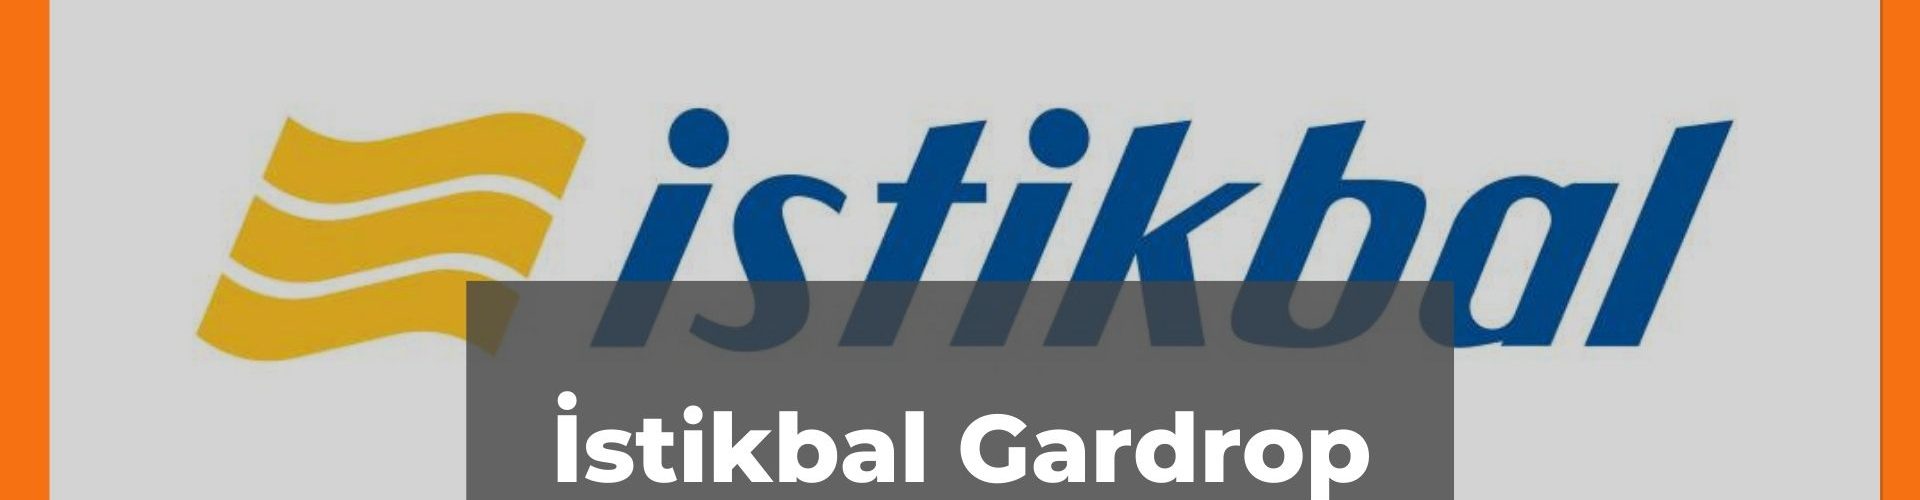 İstikbal Gardrop Fiyatları 2021, Sürgü Kapaklı Gardrop Fiyatı, istikbal gardrop fiyatları ne kadar kaç tl oldu zamlandı mı